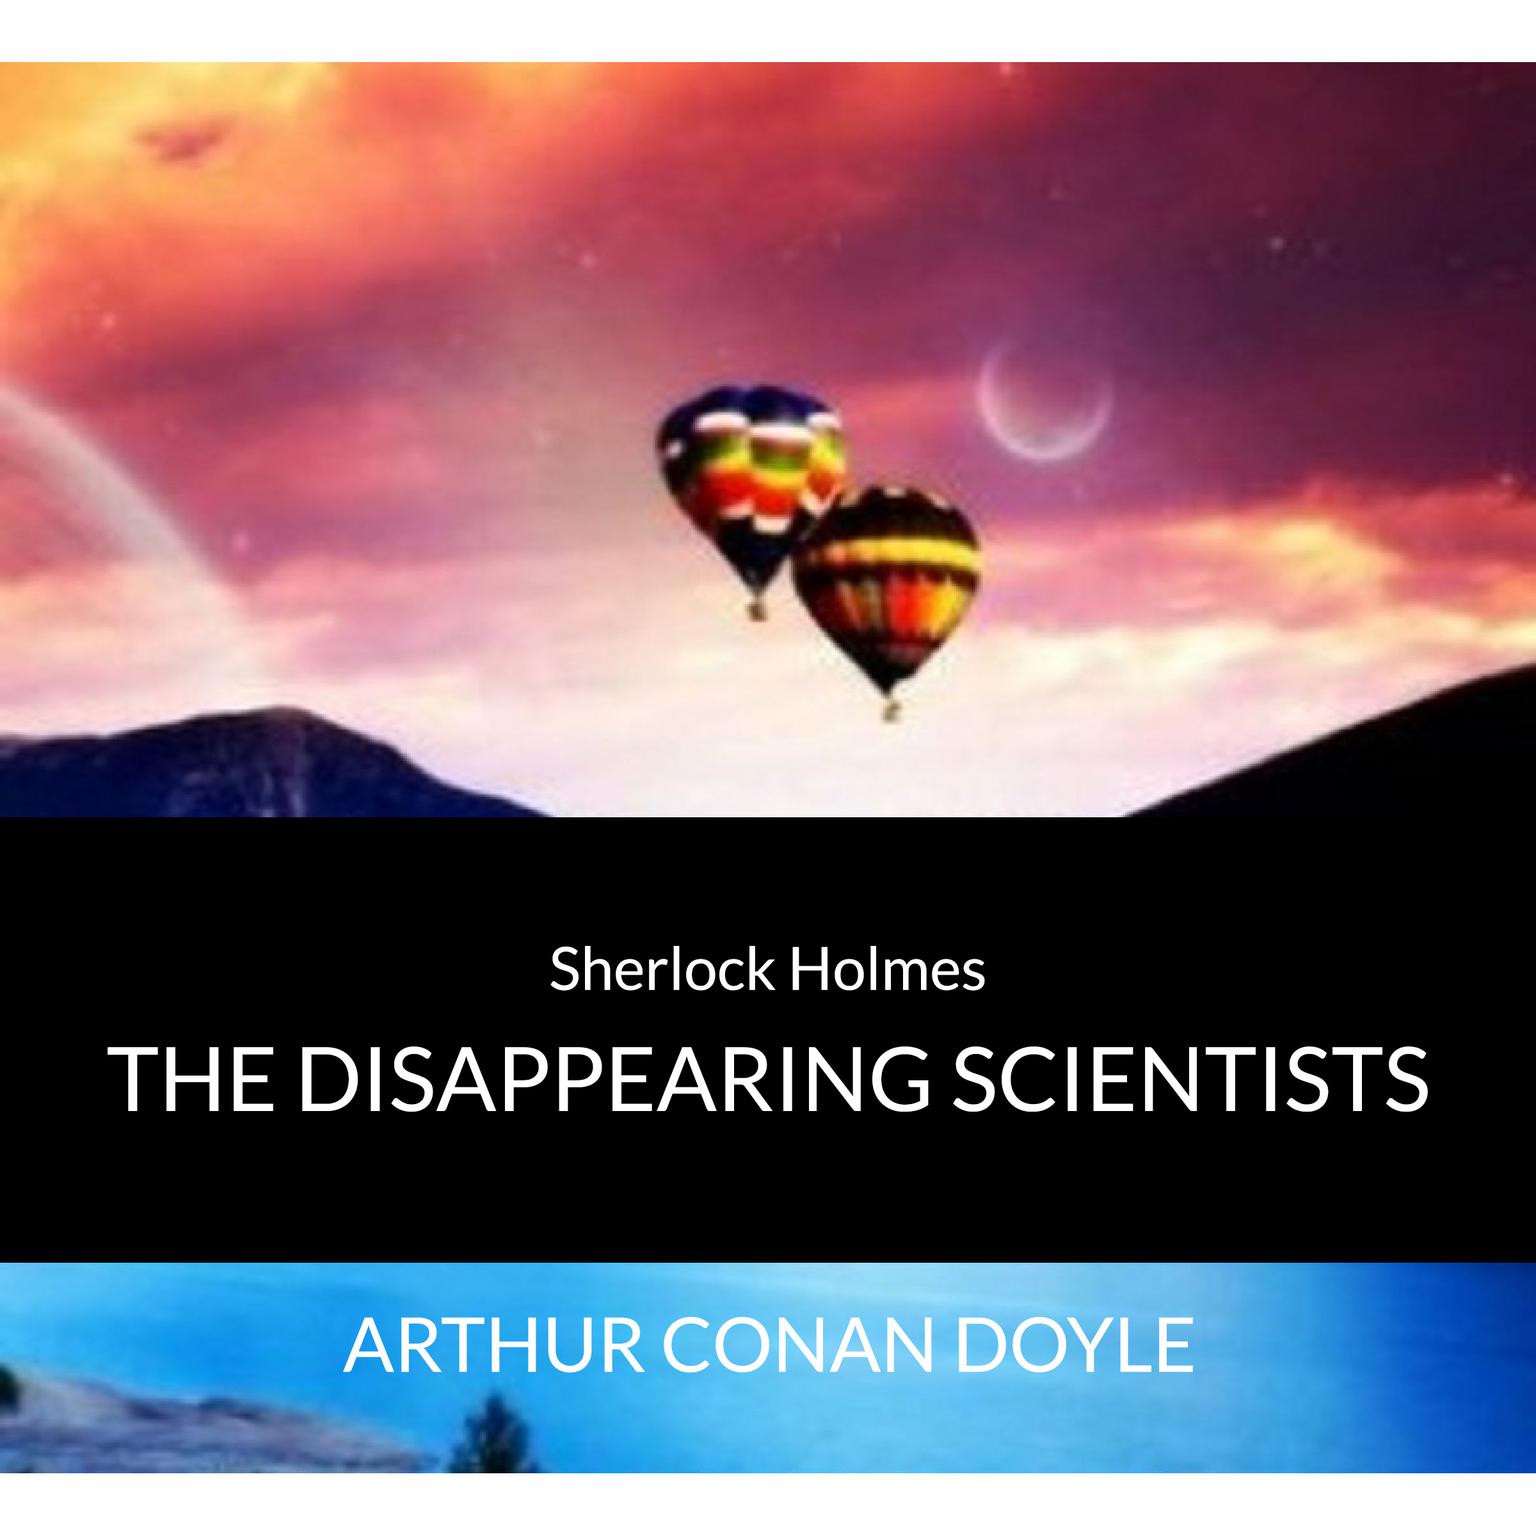 Audio Books : Sir Arthur Conan Doyle - Sherlock Holmes - The Disappearing Scientists Audiobook, by Arthur Conan Doyle